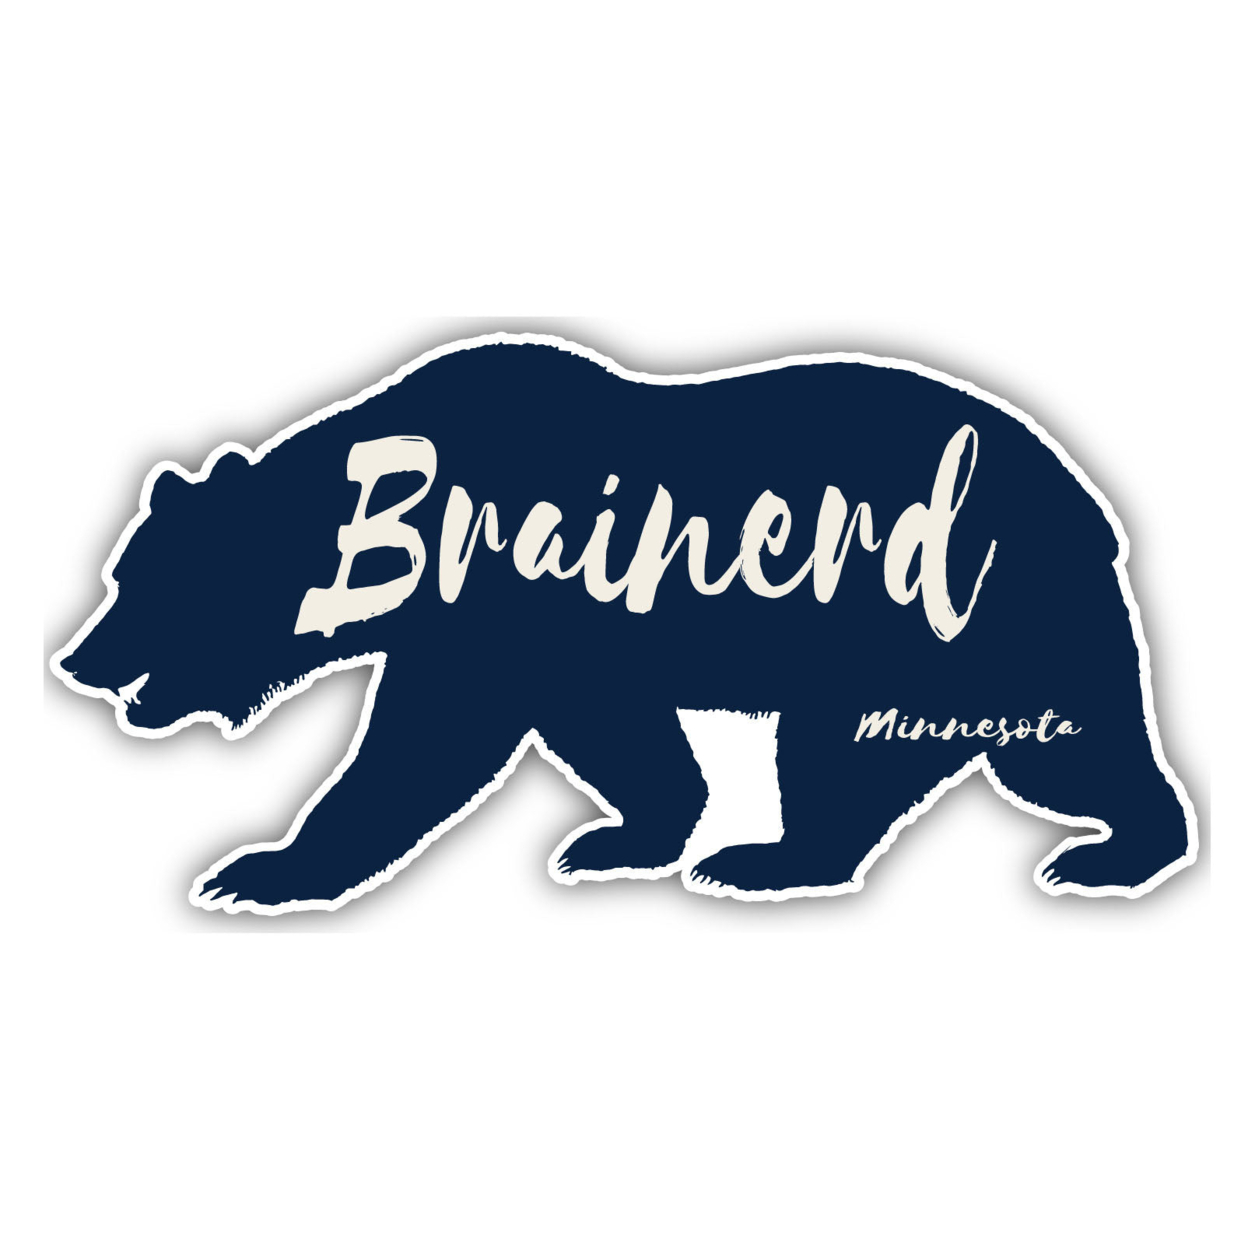 Brainerd Minnesota Souvenir Decorative Stickers (Choose Theme And Size) - 4-Pack, 12-Inch, Tent